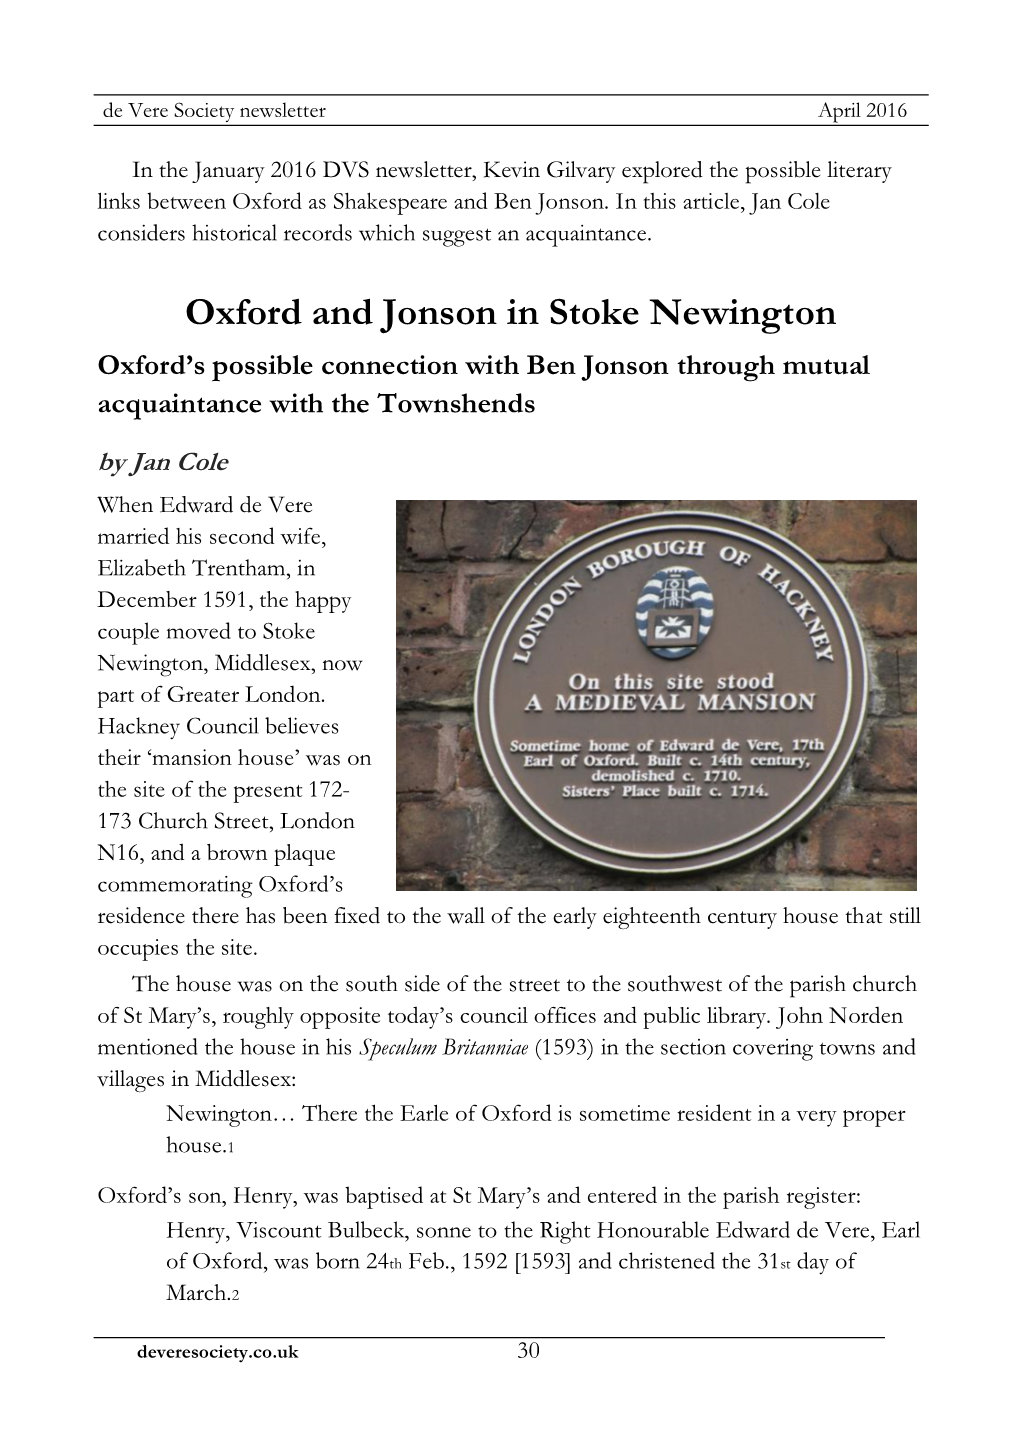 Oxford and Jonson in Stoke Newington